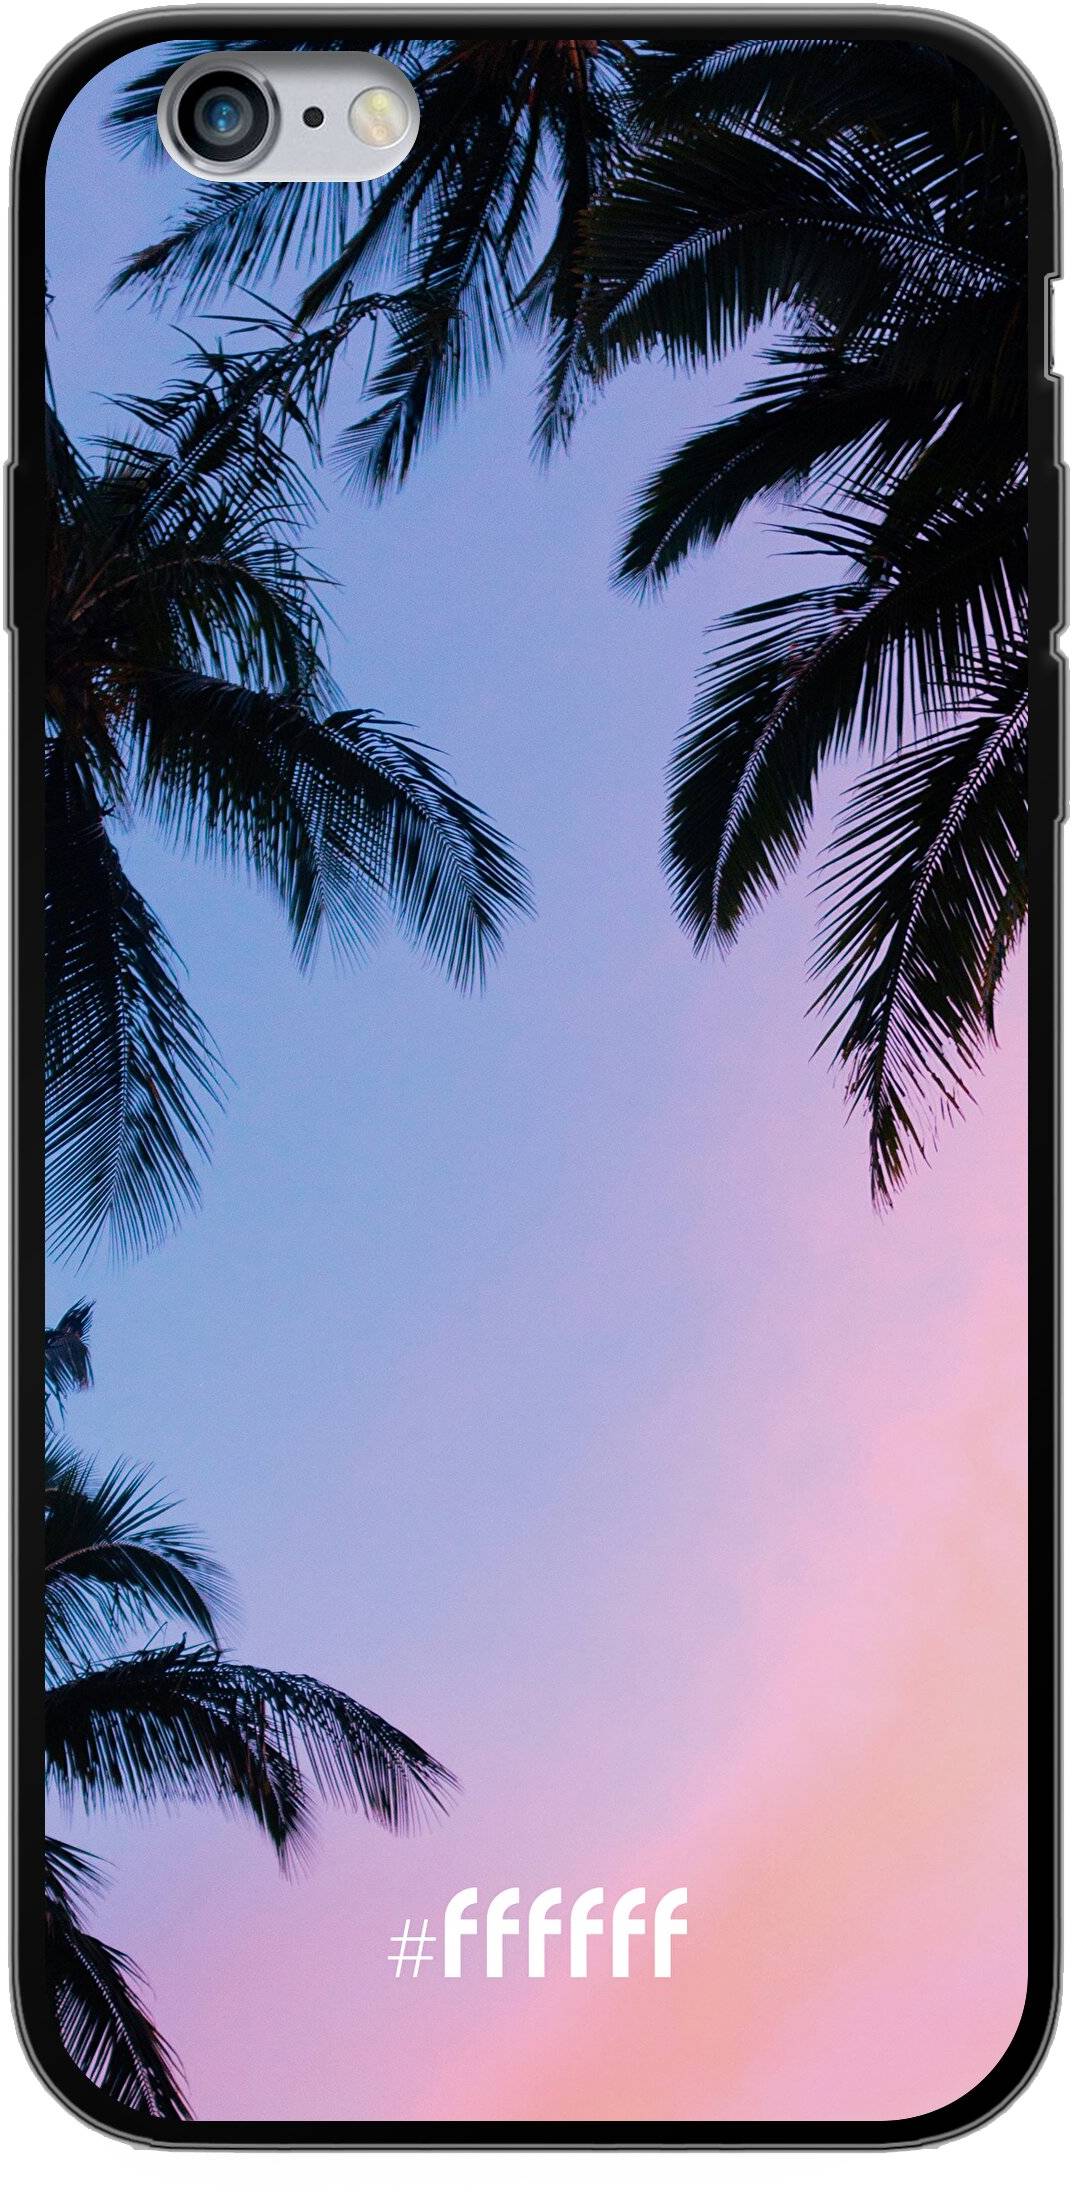 Sunset Palms iPhone 6s